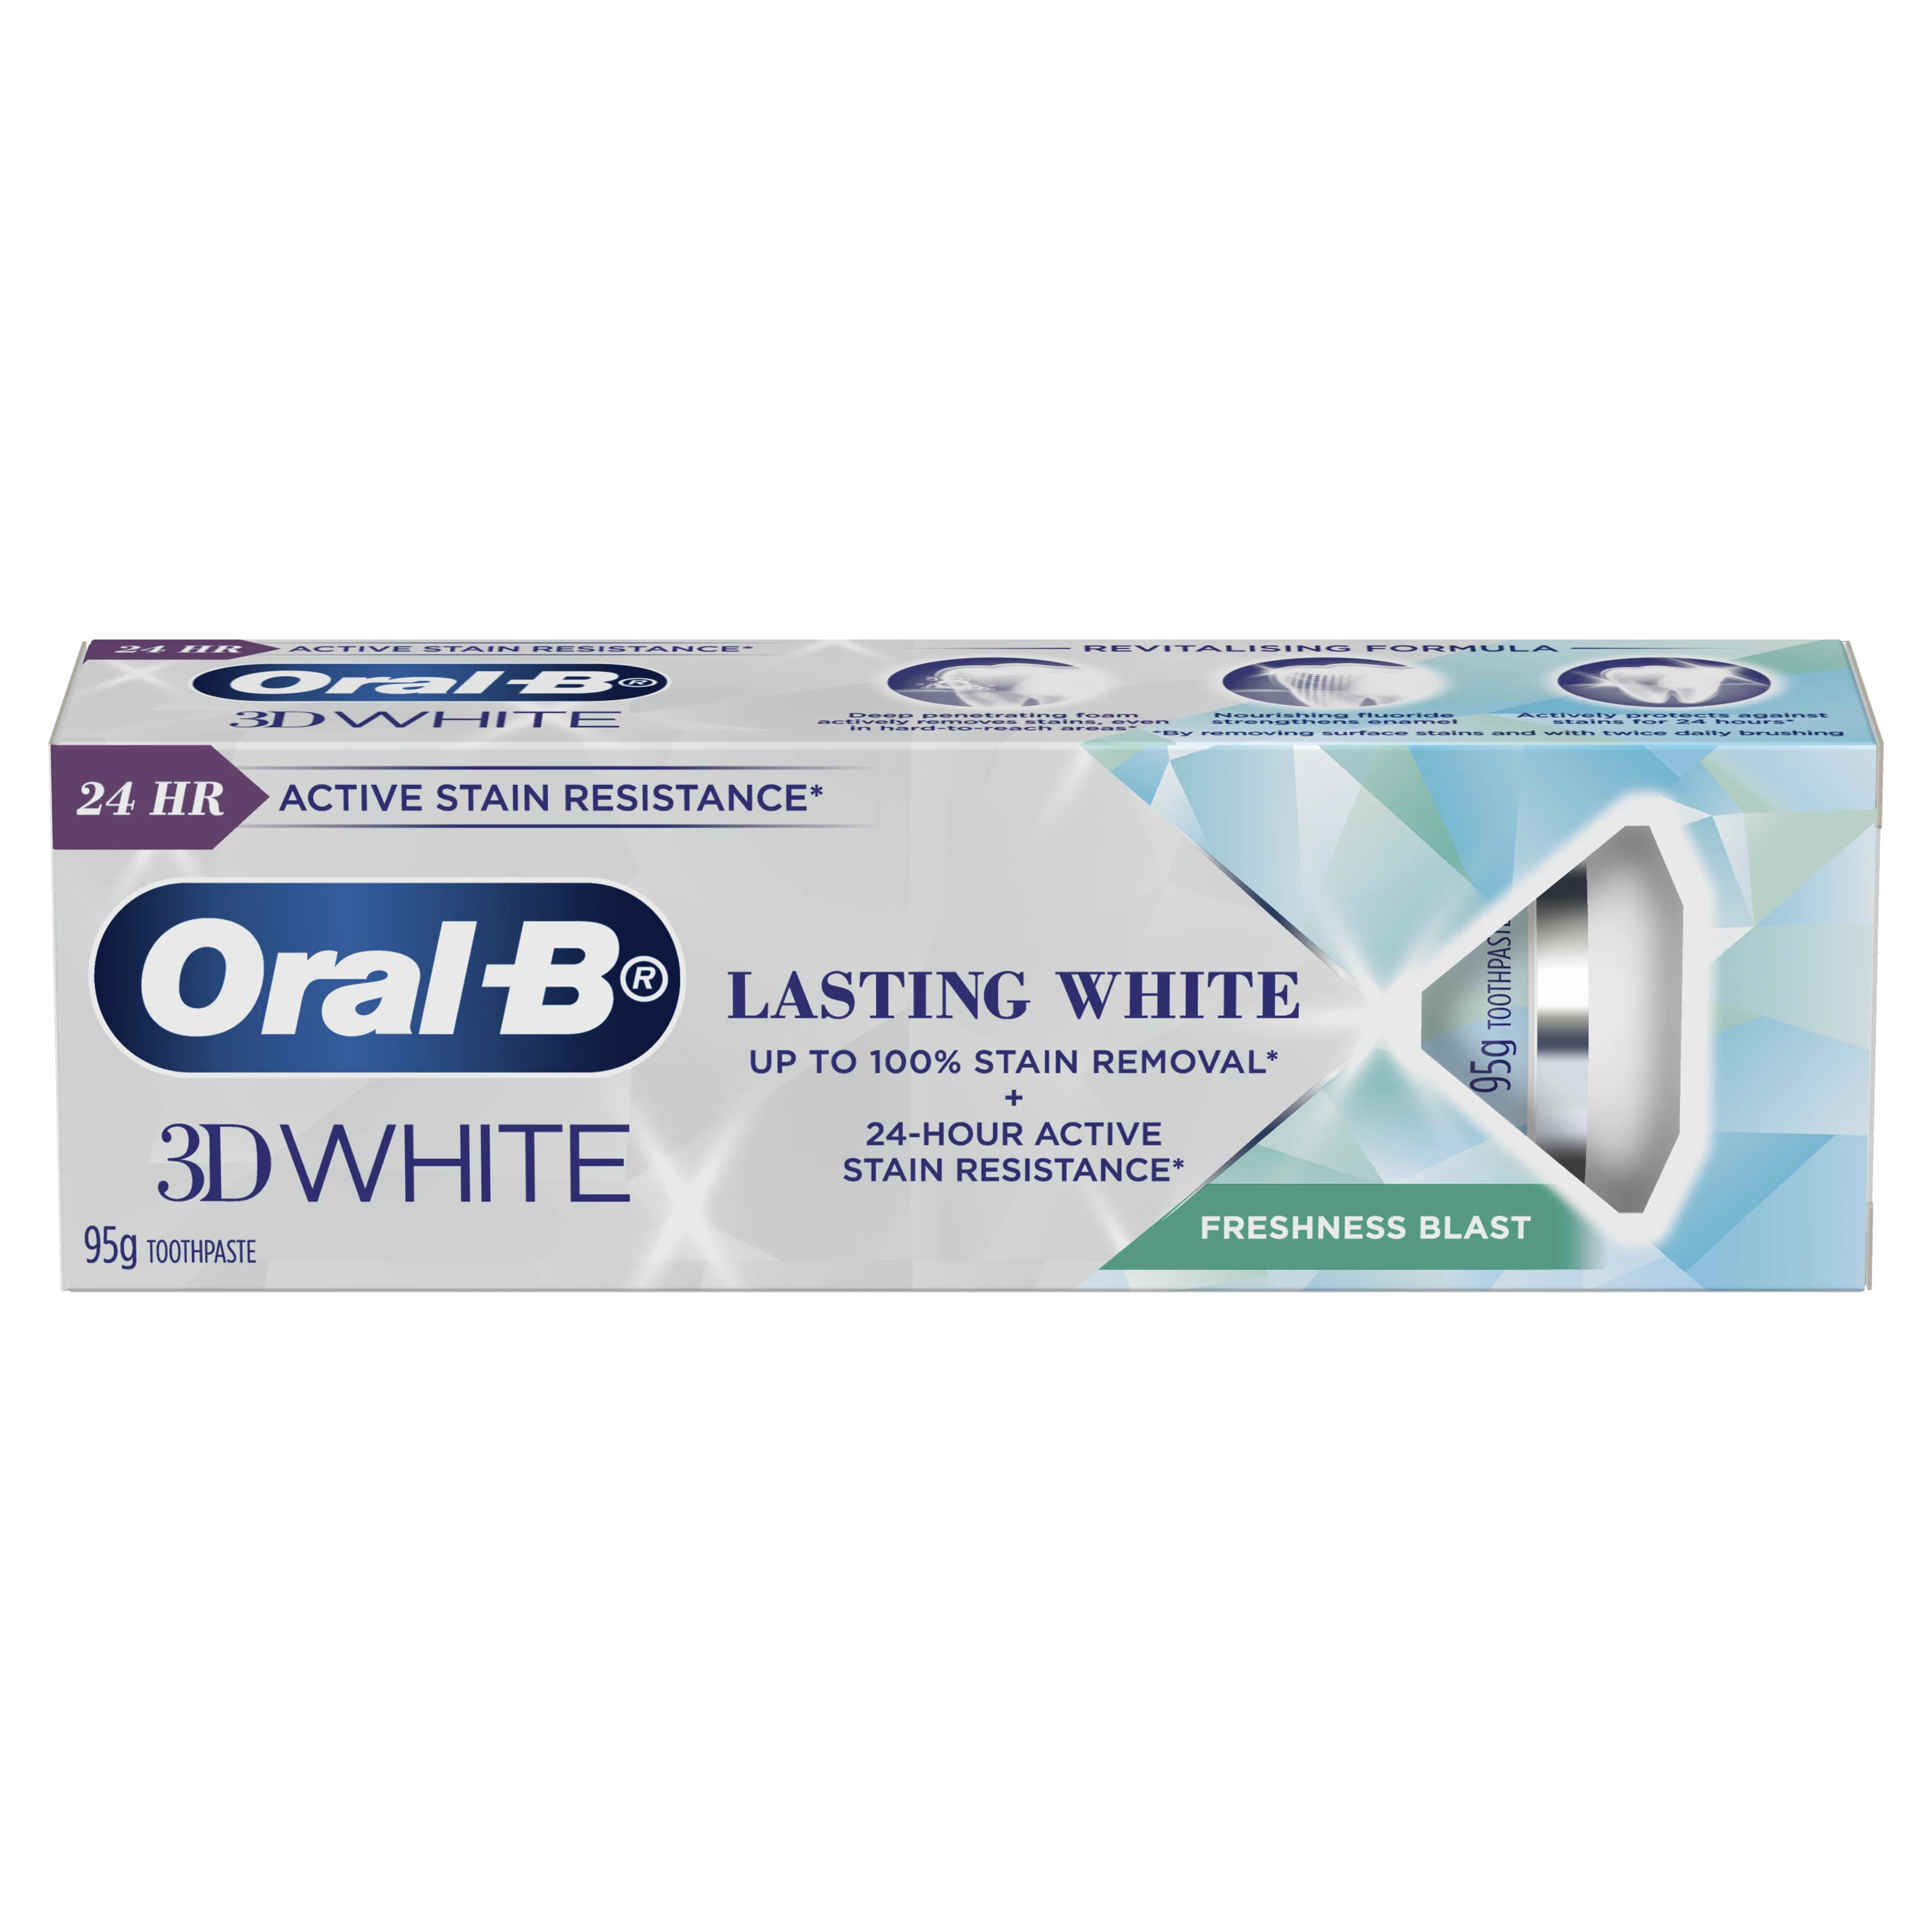 Oral-B 3DWhite Lasting White Freshness Blast Toothpaste 